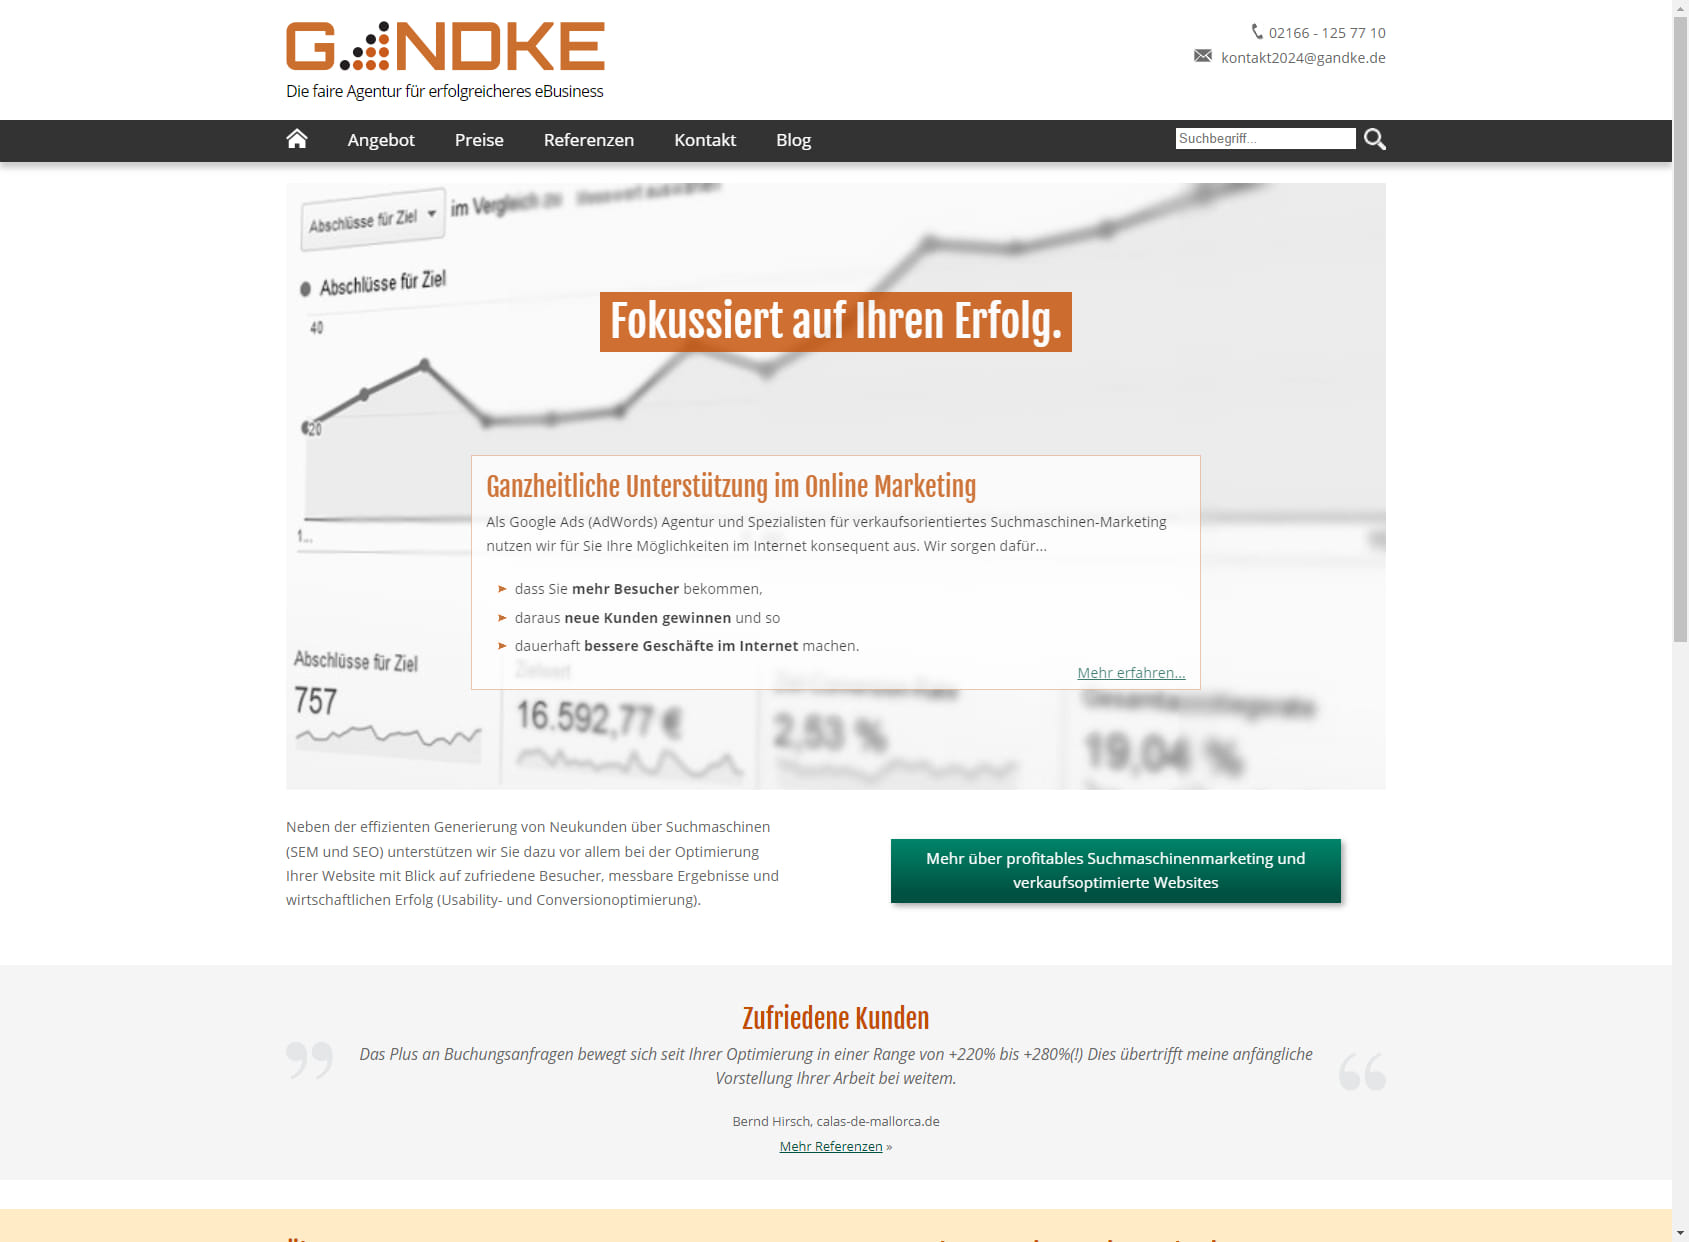 gandke marketing & software gmbh